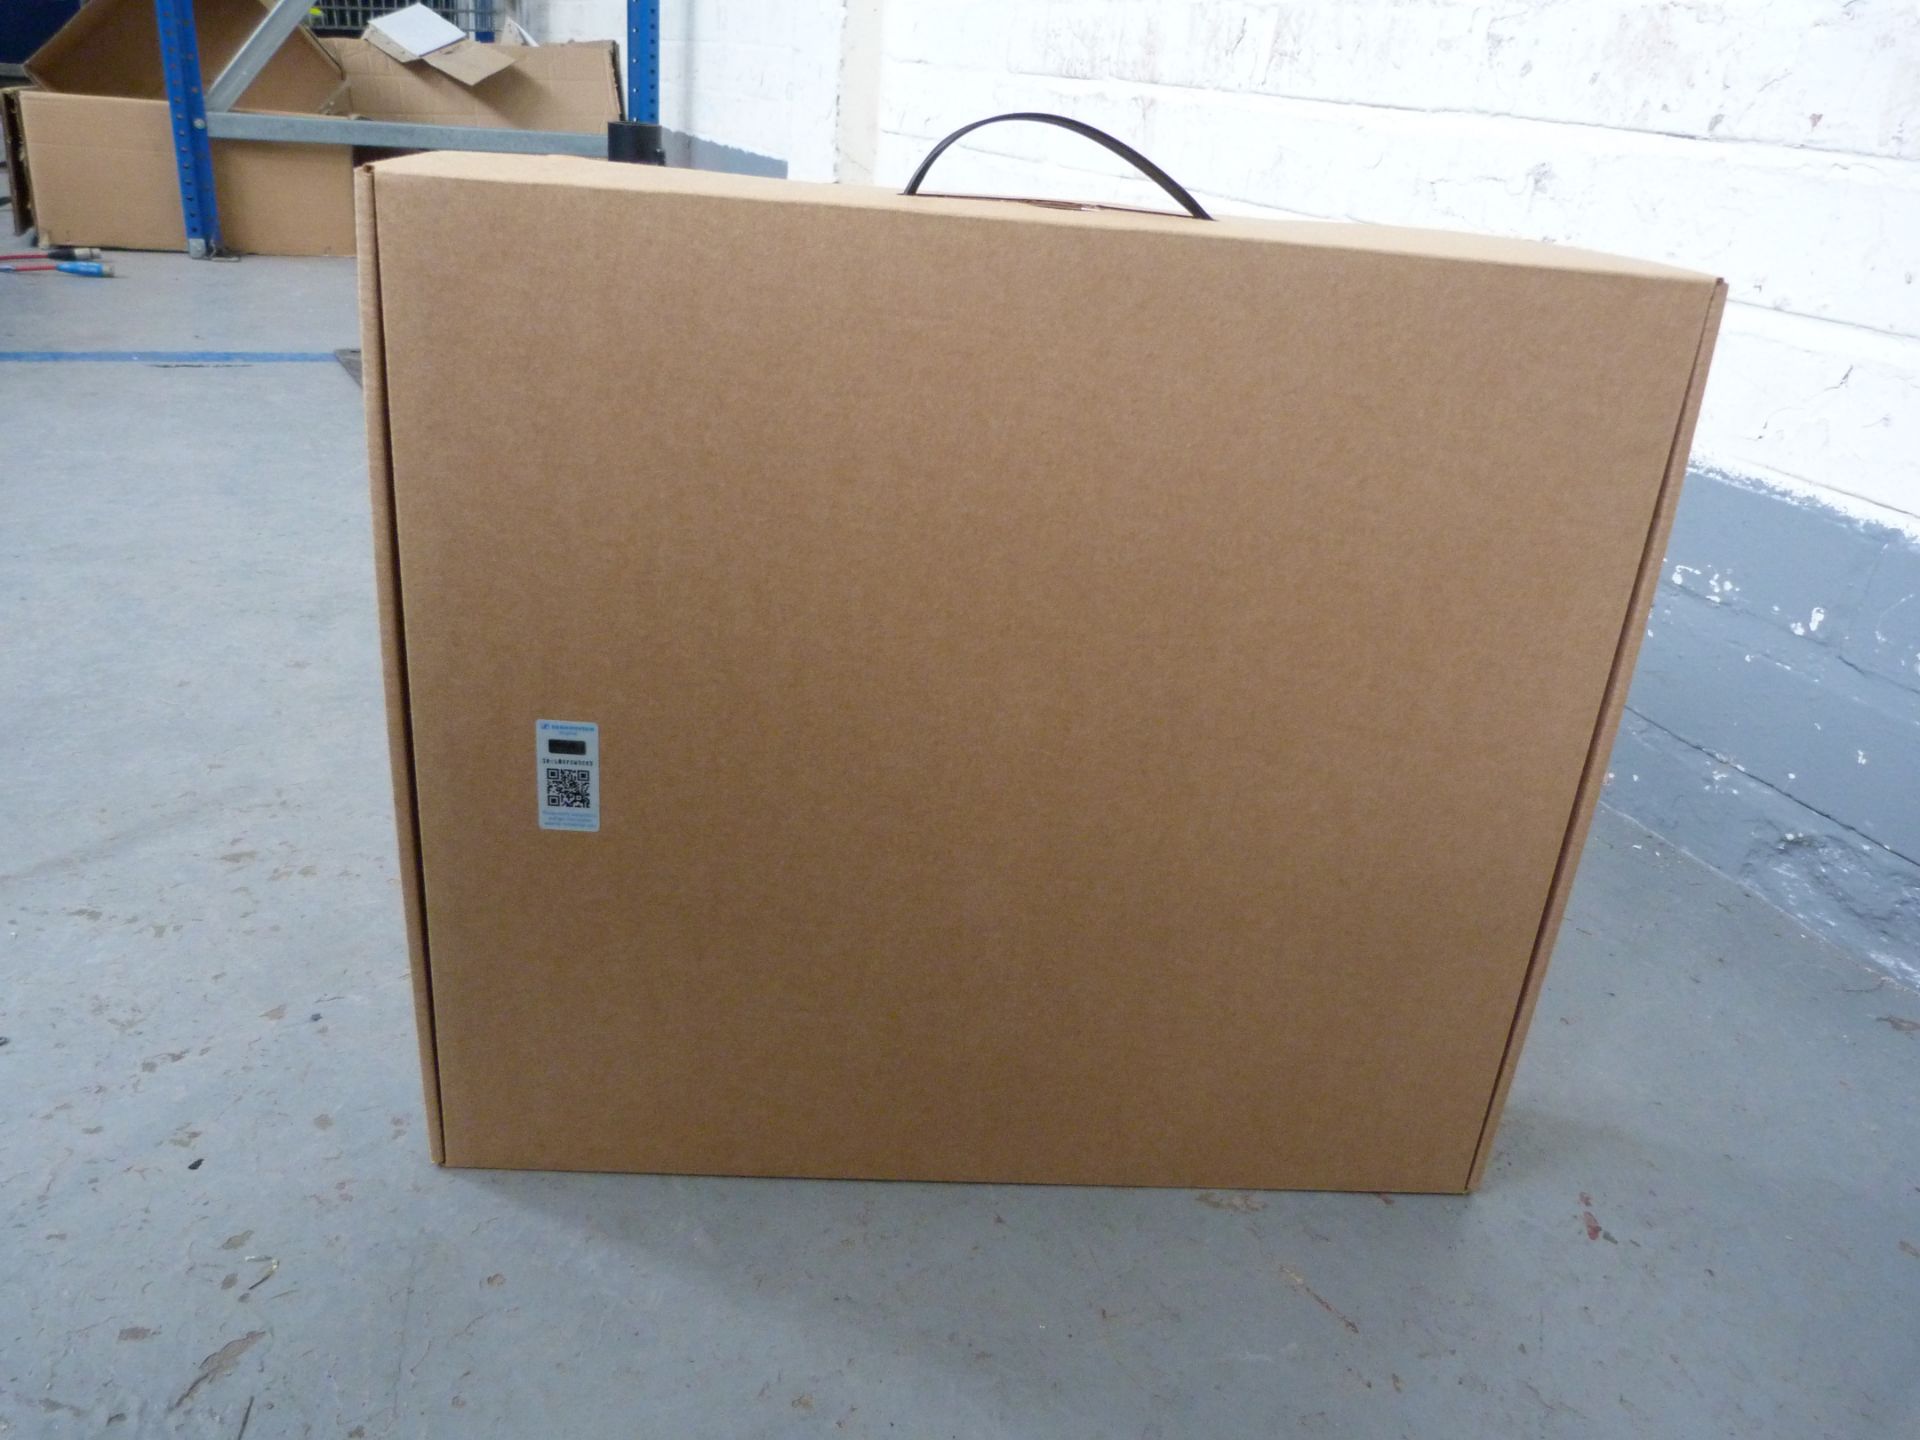 Sennheiser EW 300 G4-BASE SK-RC-GBW Bodypack Base Set 507696. In Cardboard. Serial No: 8348709859 - Image 6 of 6